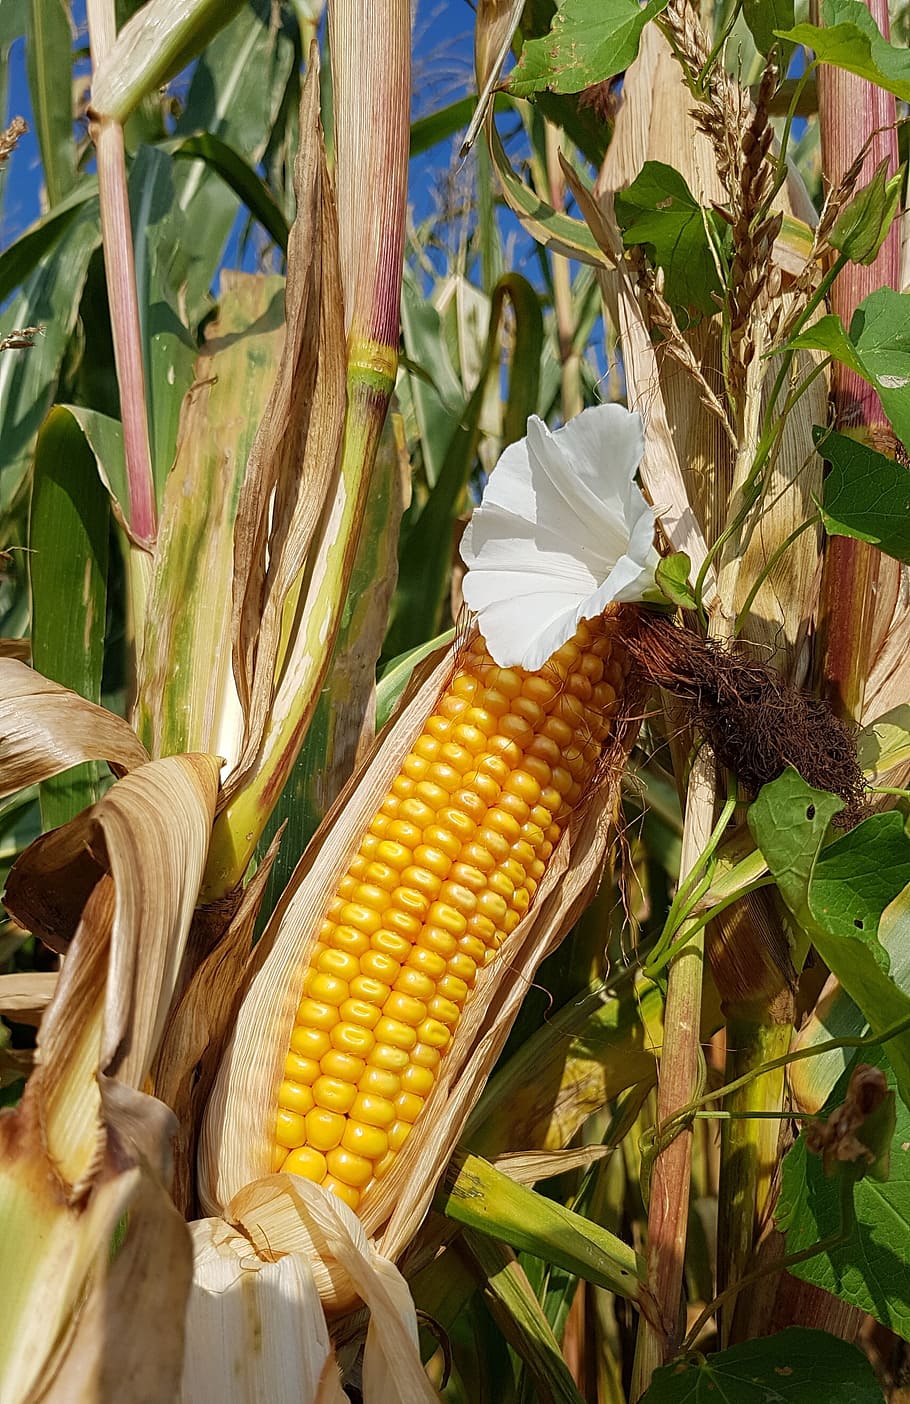 corn, corn on the cob, corn field harvest, fodder plant, fodder maize, bindweed, blossom, bloom, wild flower, agriculture